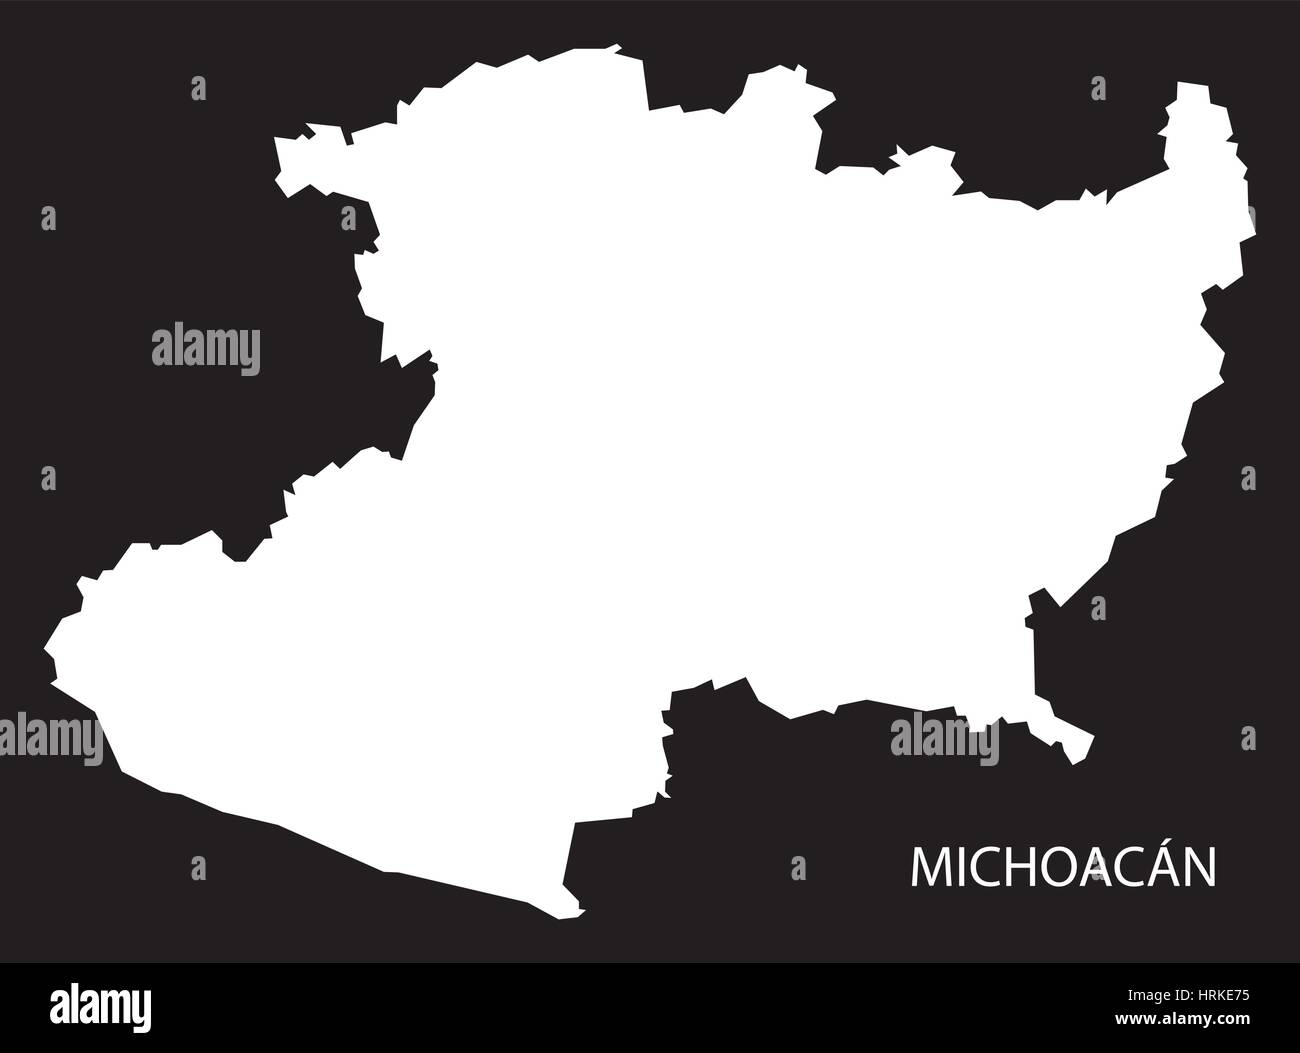 Michoacan Mexiko Karte schwarz invertiert silhouette Stock Vektor